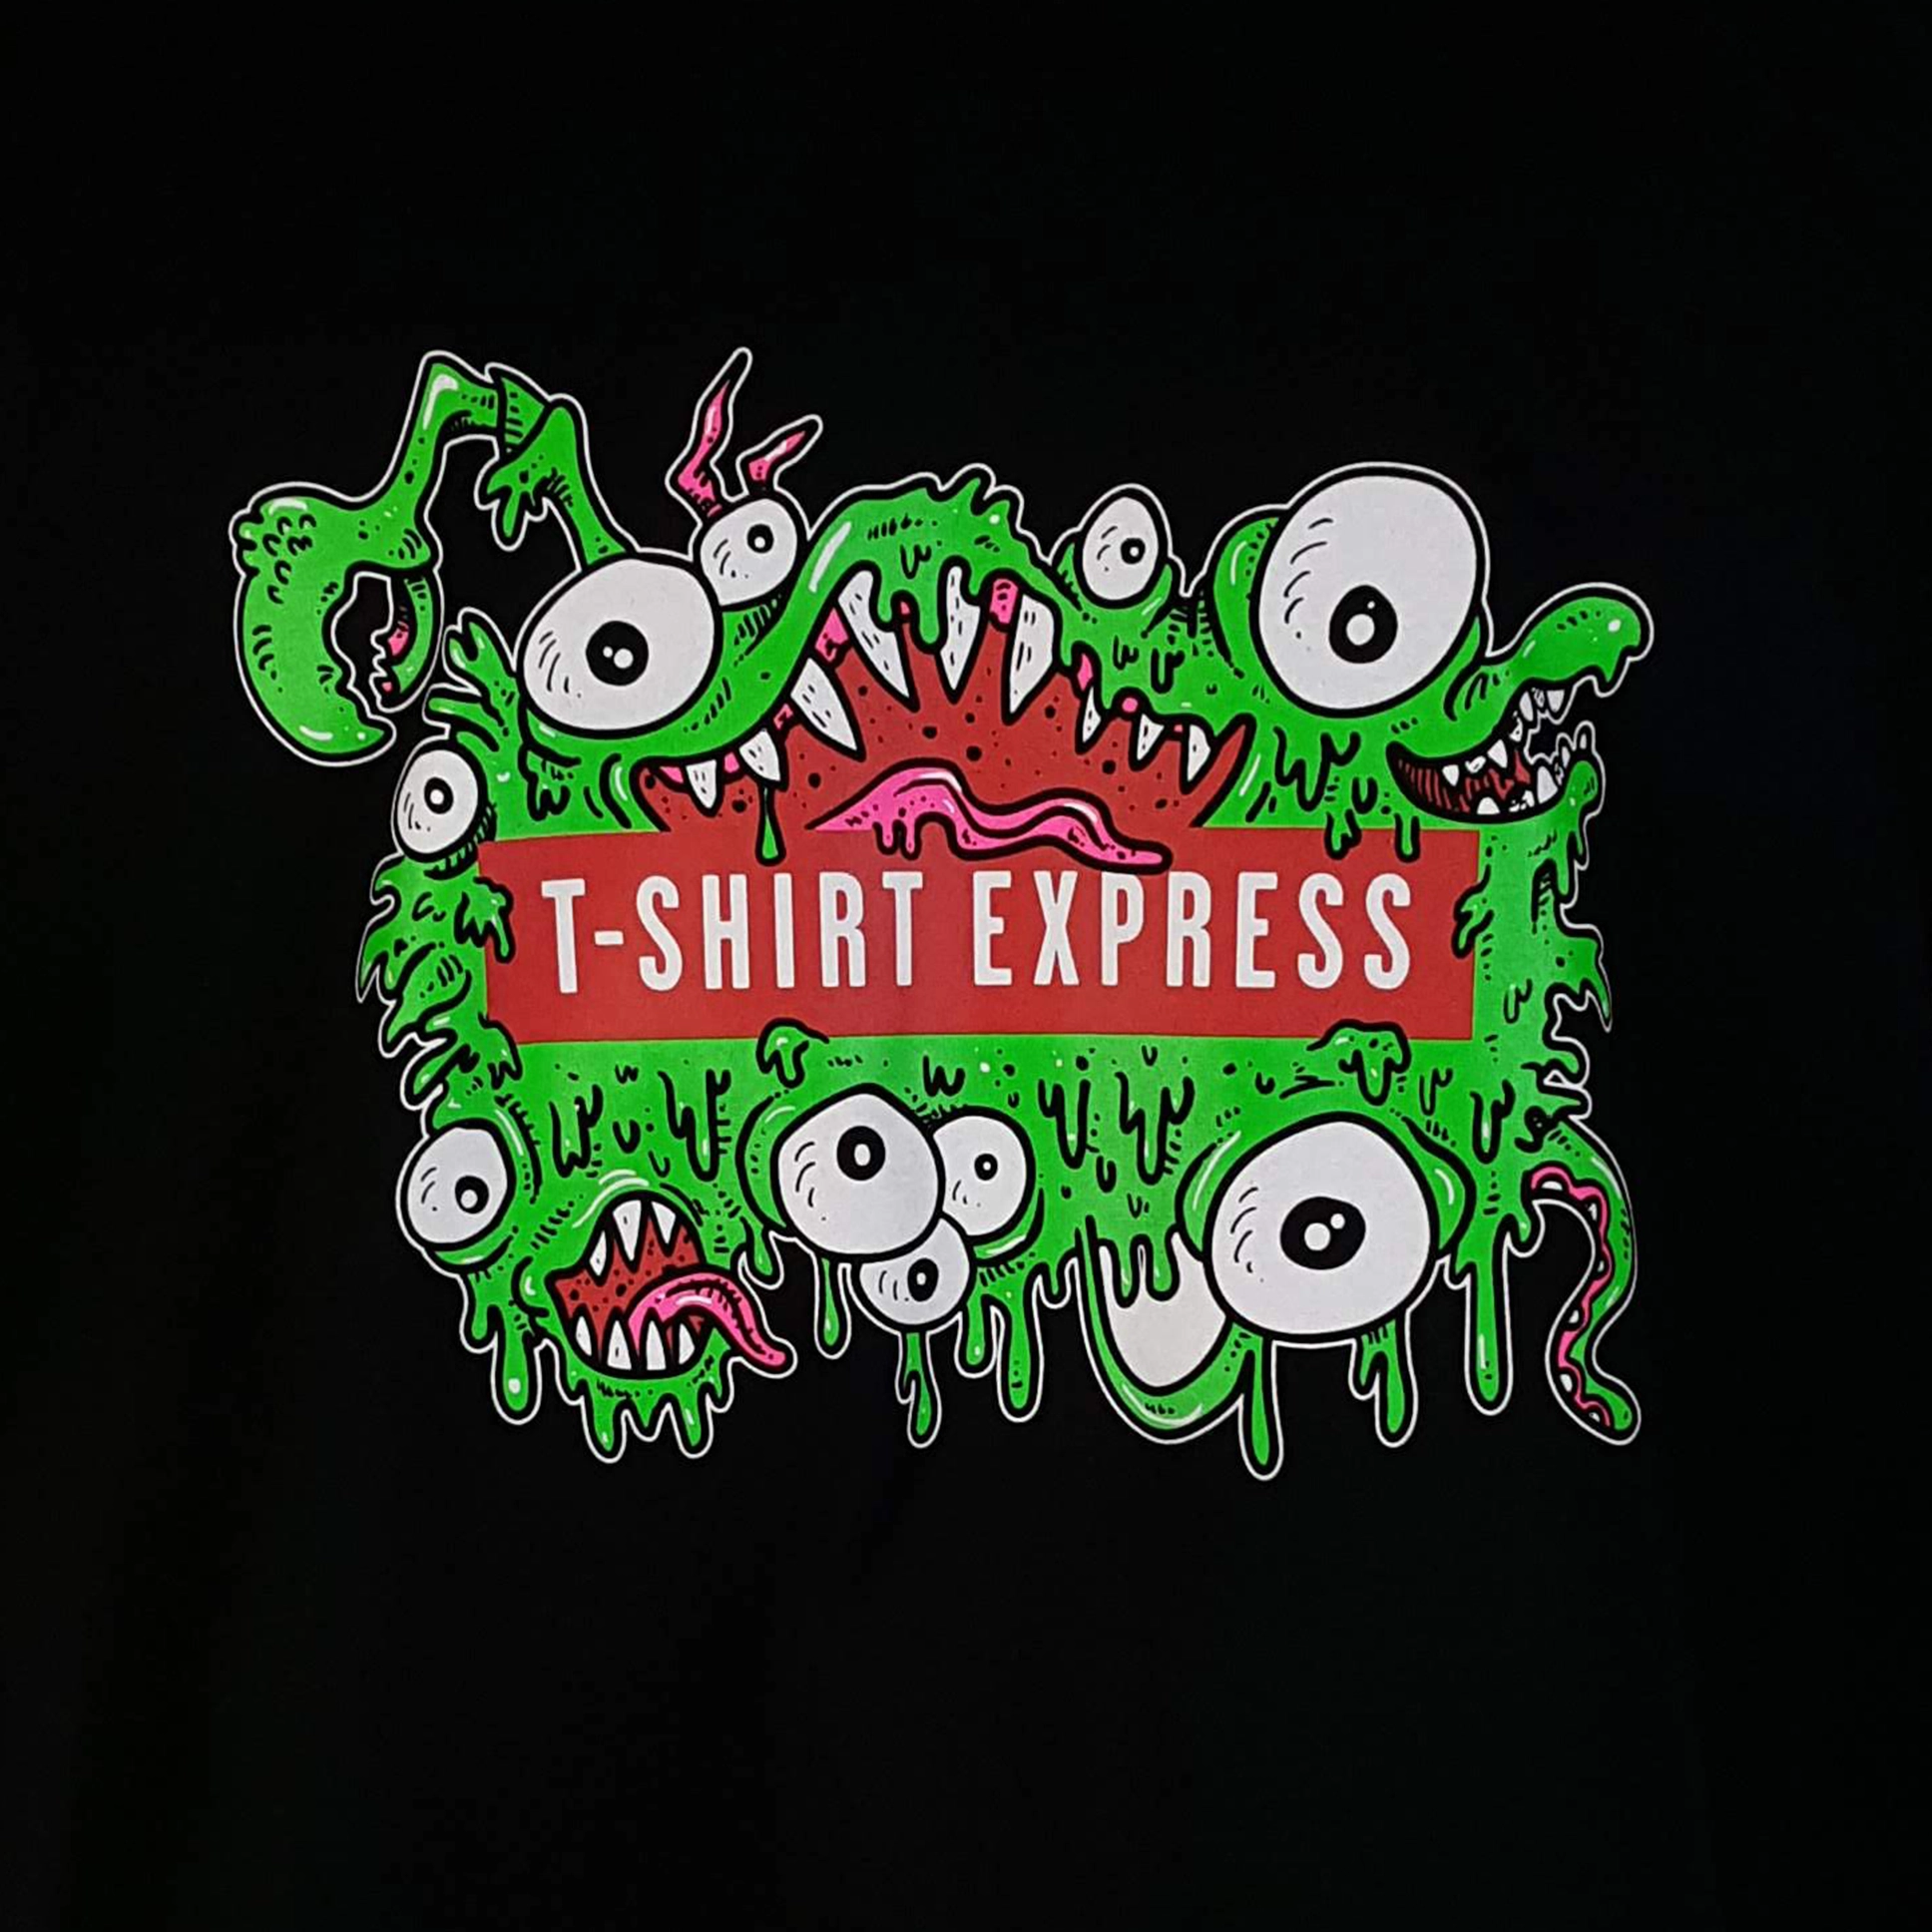 t-shirt express in Scioto ohio